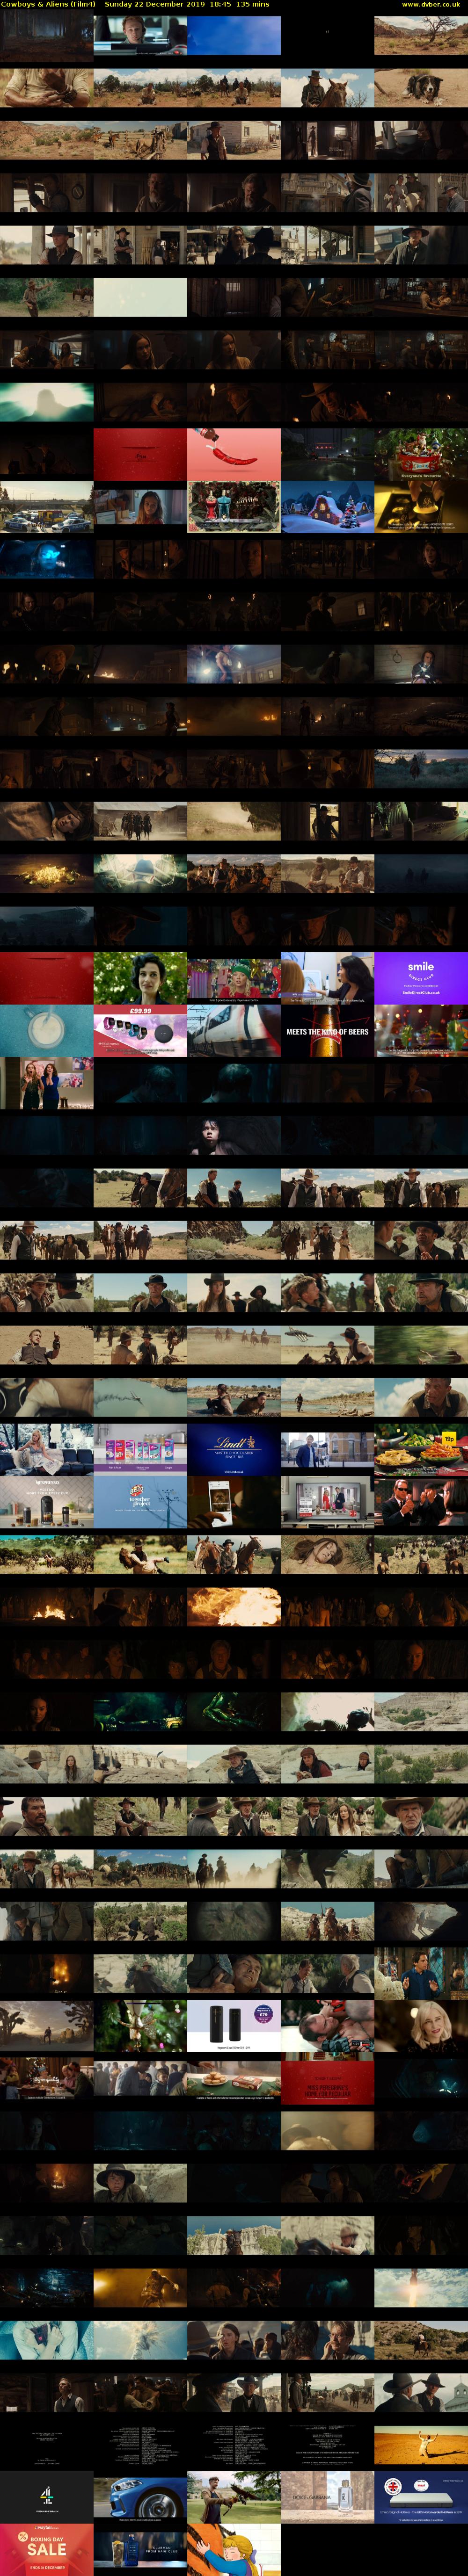 Cowboys & Aliens (Film4) Sunday 22 December 2019 18:45 - 21:00